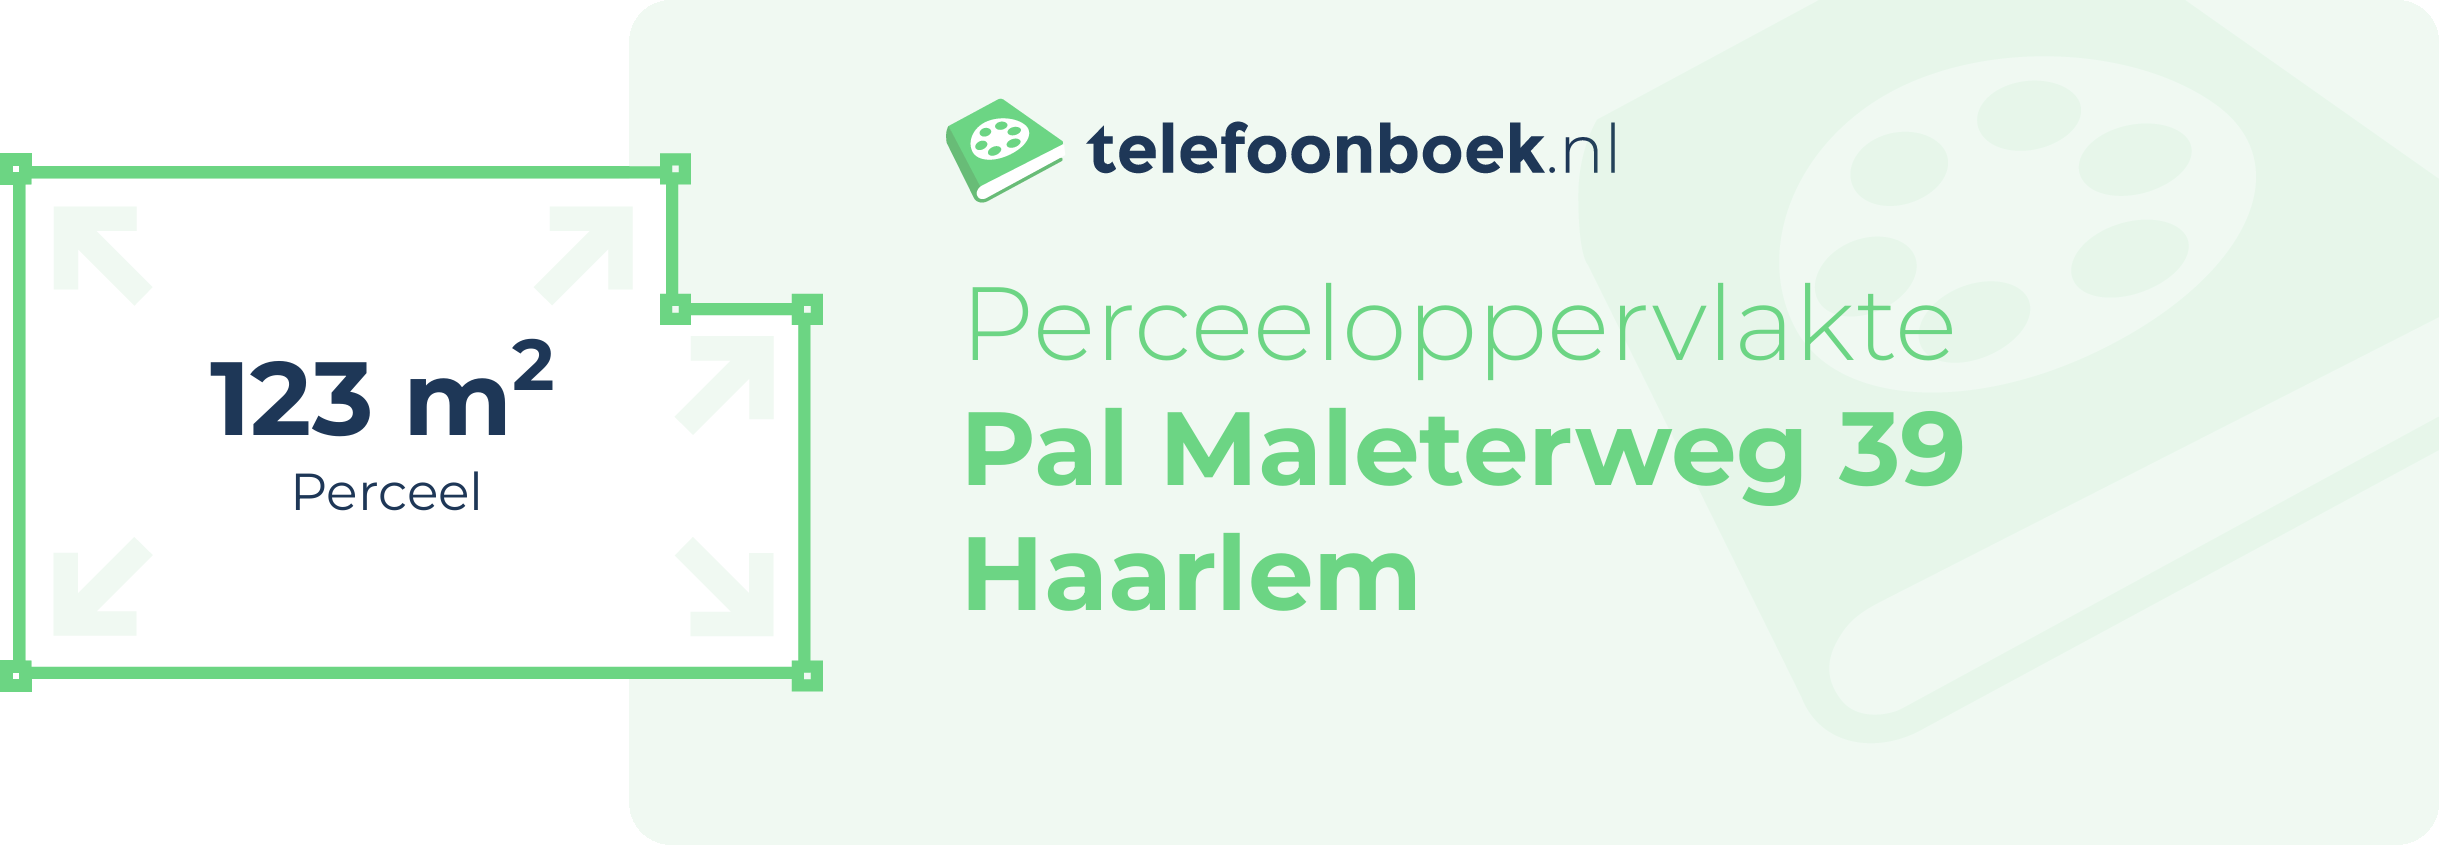 Perceeloppervlakte Pal Maleterweg 39 Haarlem